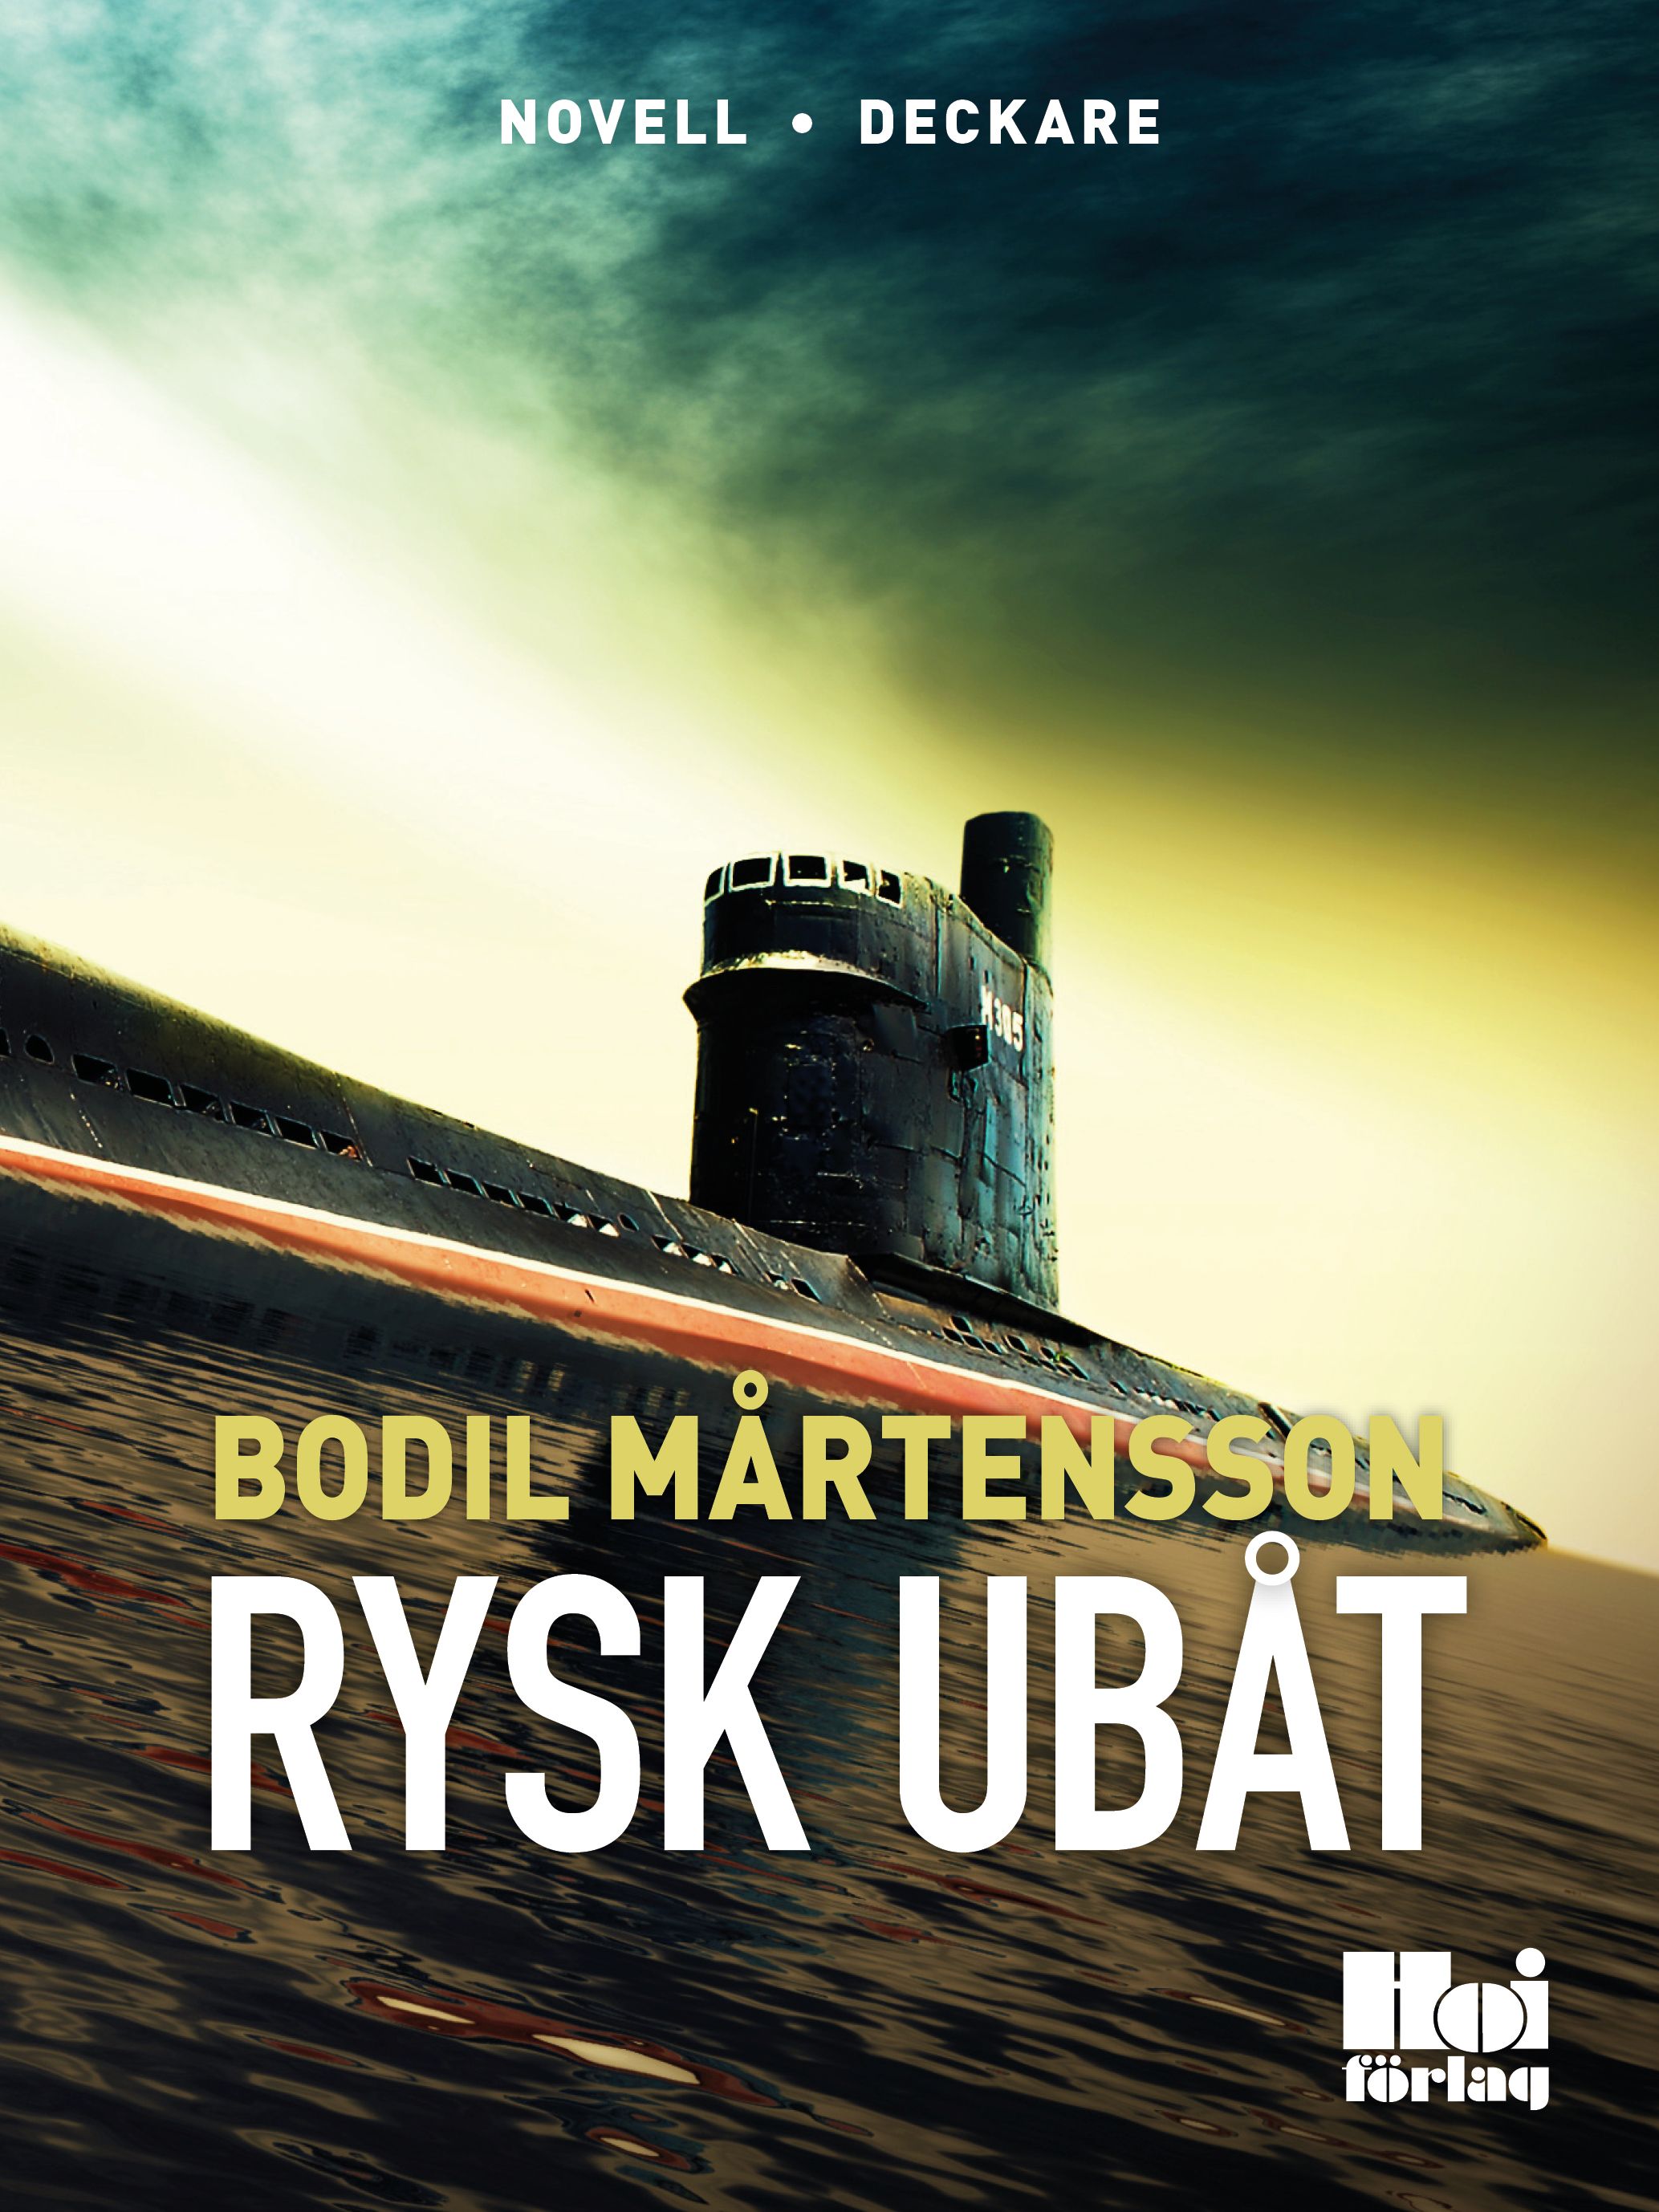 Rysk ubåt, eBook by Bodil Mårtensson